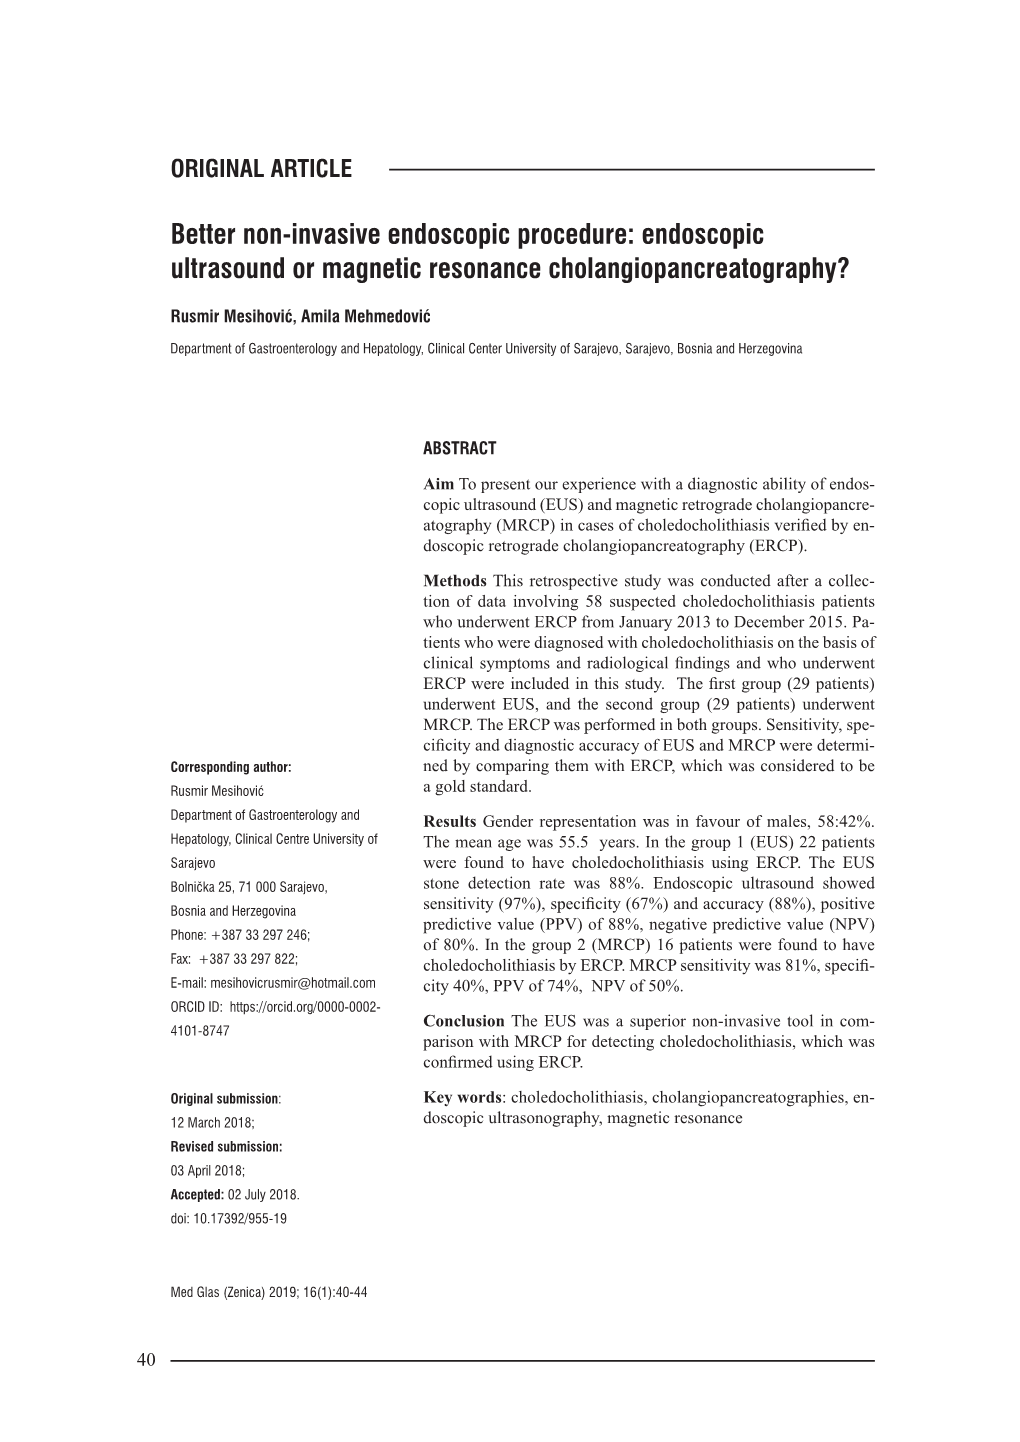 Better Non-Invasive Endoscopic Procedure: Endoscopic Ultrasound Or Magnetic Resonance Cholangiopancreatography?